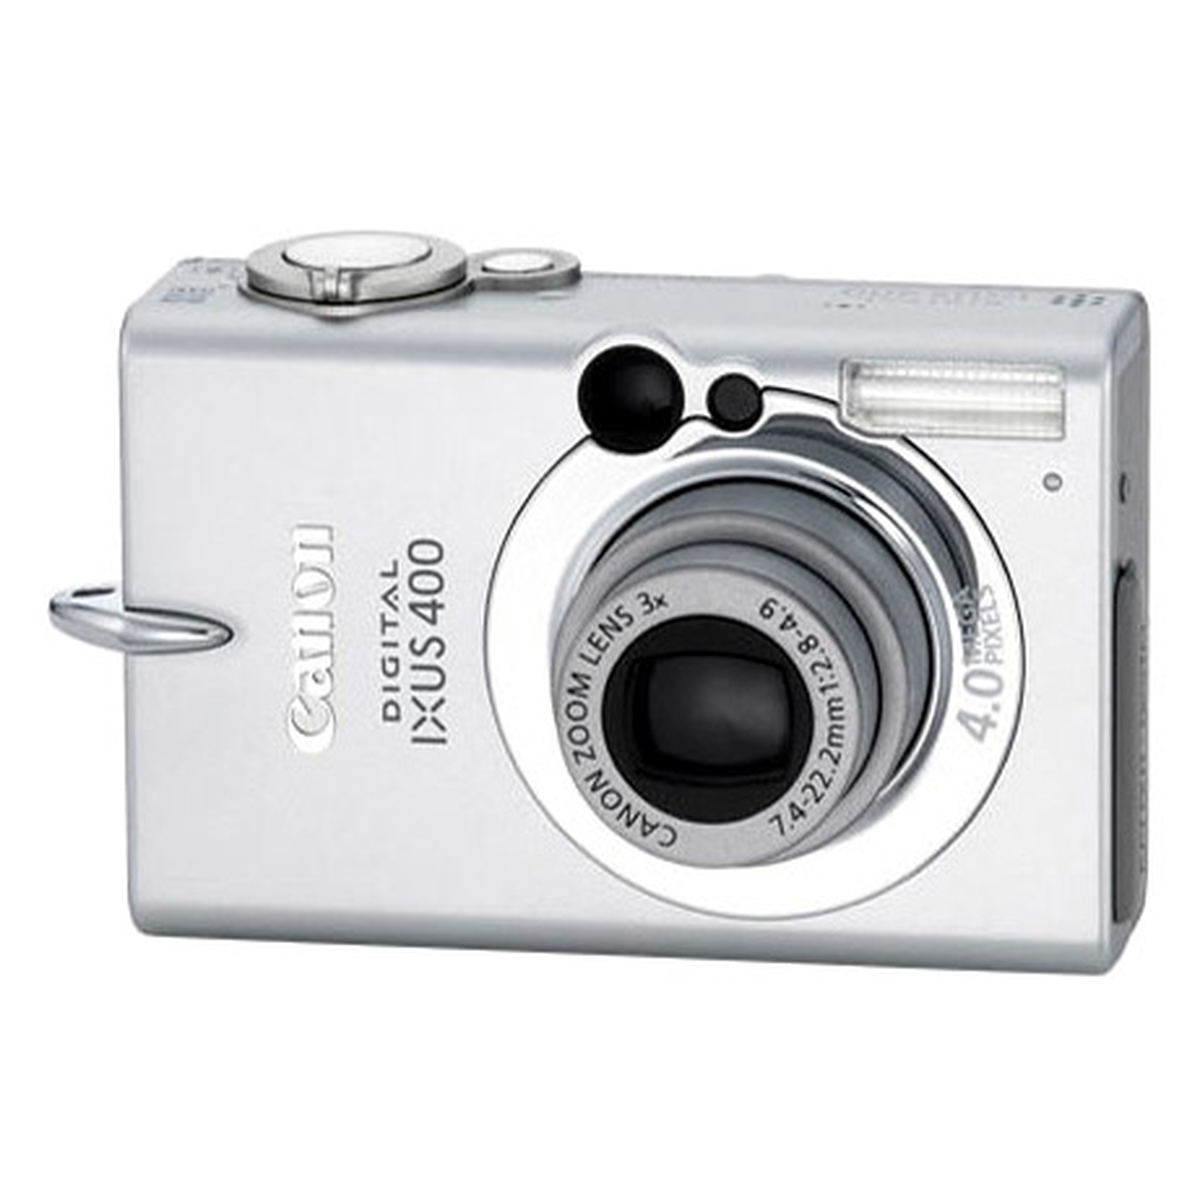 Canon PowerShot S400 / Ixus 400 : Specifications and Opinions | JuzaPhoto